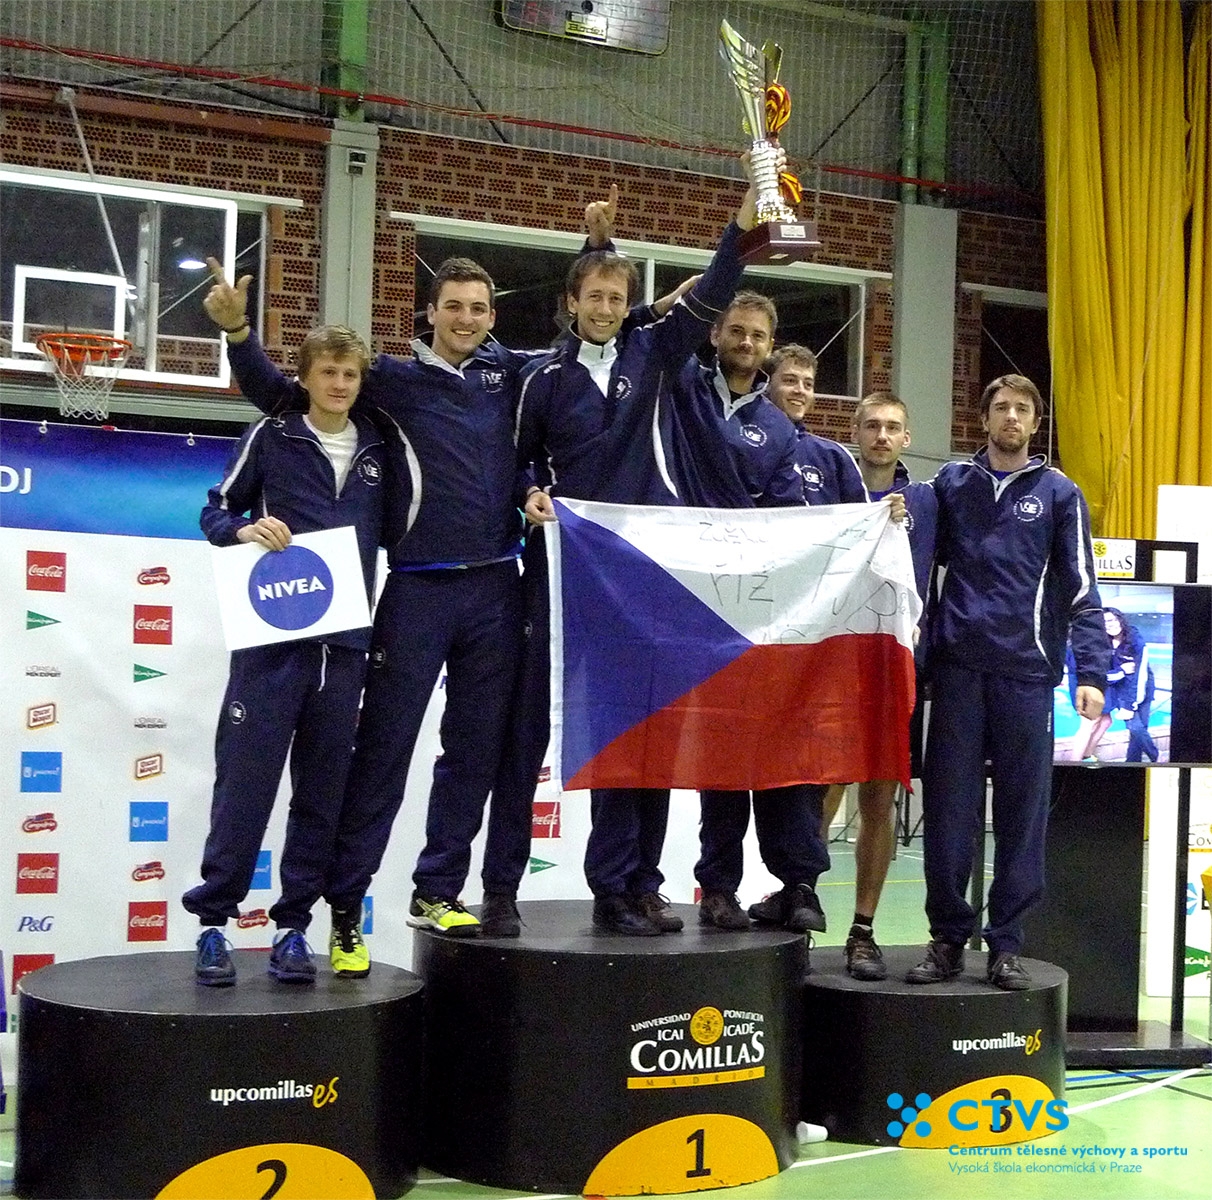 Volejbalová reprezentace vybojovala dvě medaile na turnaji v Madridu